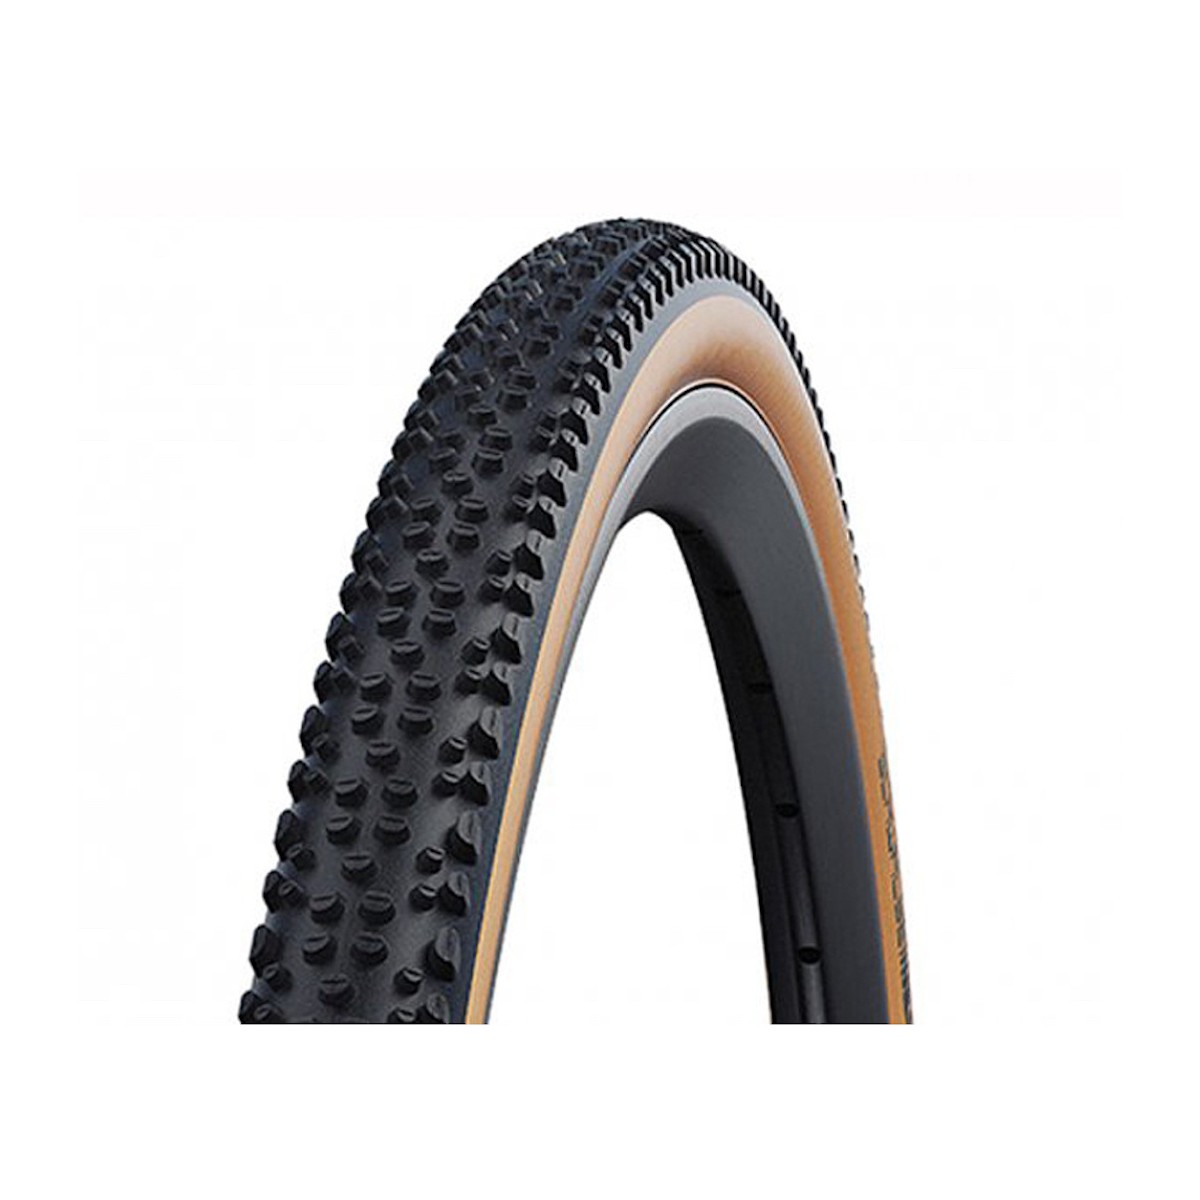 SCHWALBE X-ONE ALLROUND 700 X 33C tubeless tyre